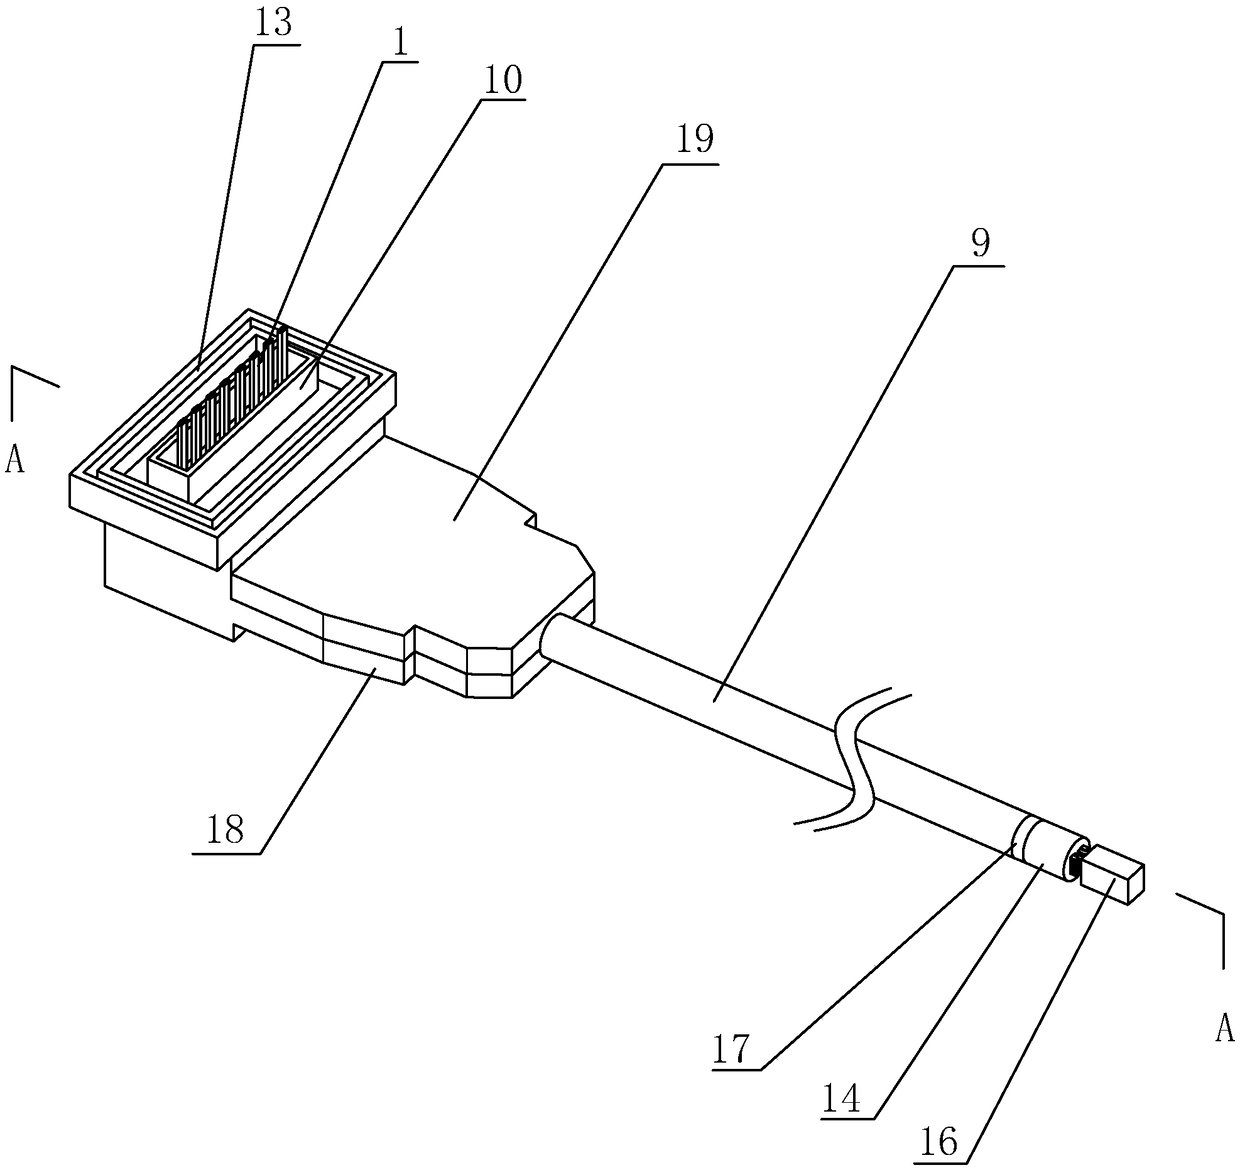 A connection wire for automotive sensors